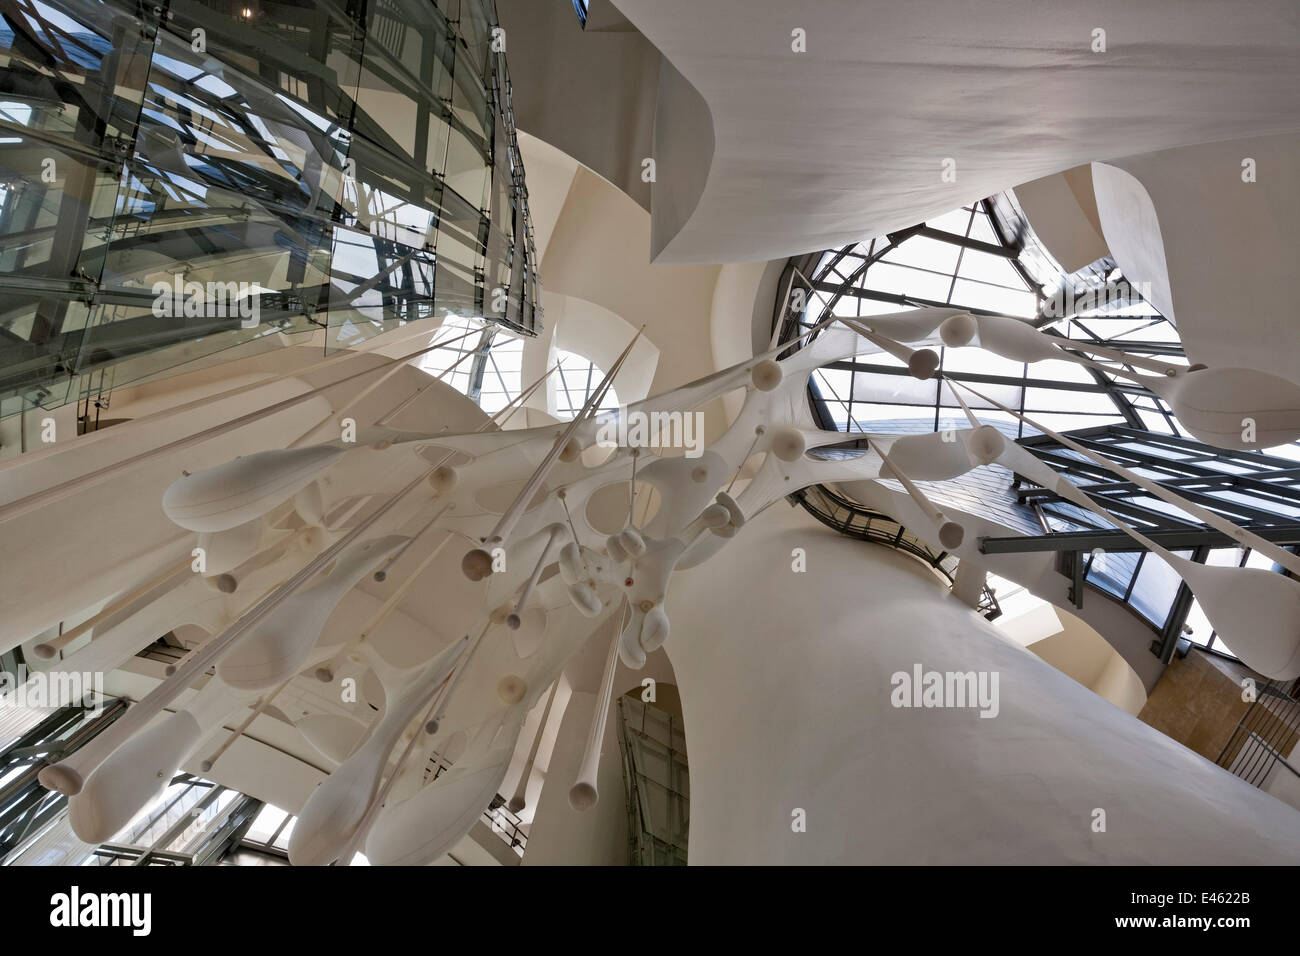 Musée Guggenheim de Bilbao, Bilbao, Espagne. Architecte : Frank Gehry, 1997. Banque D'Images